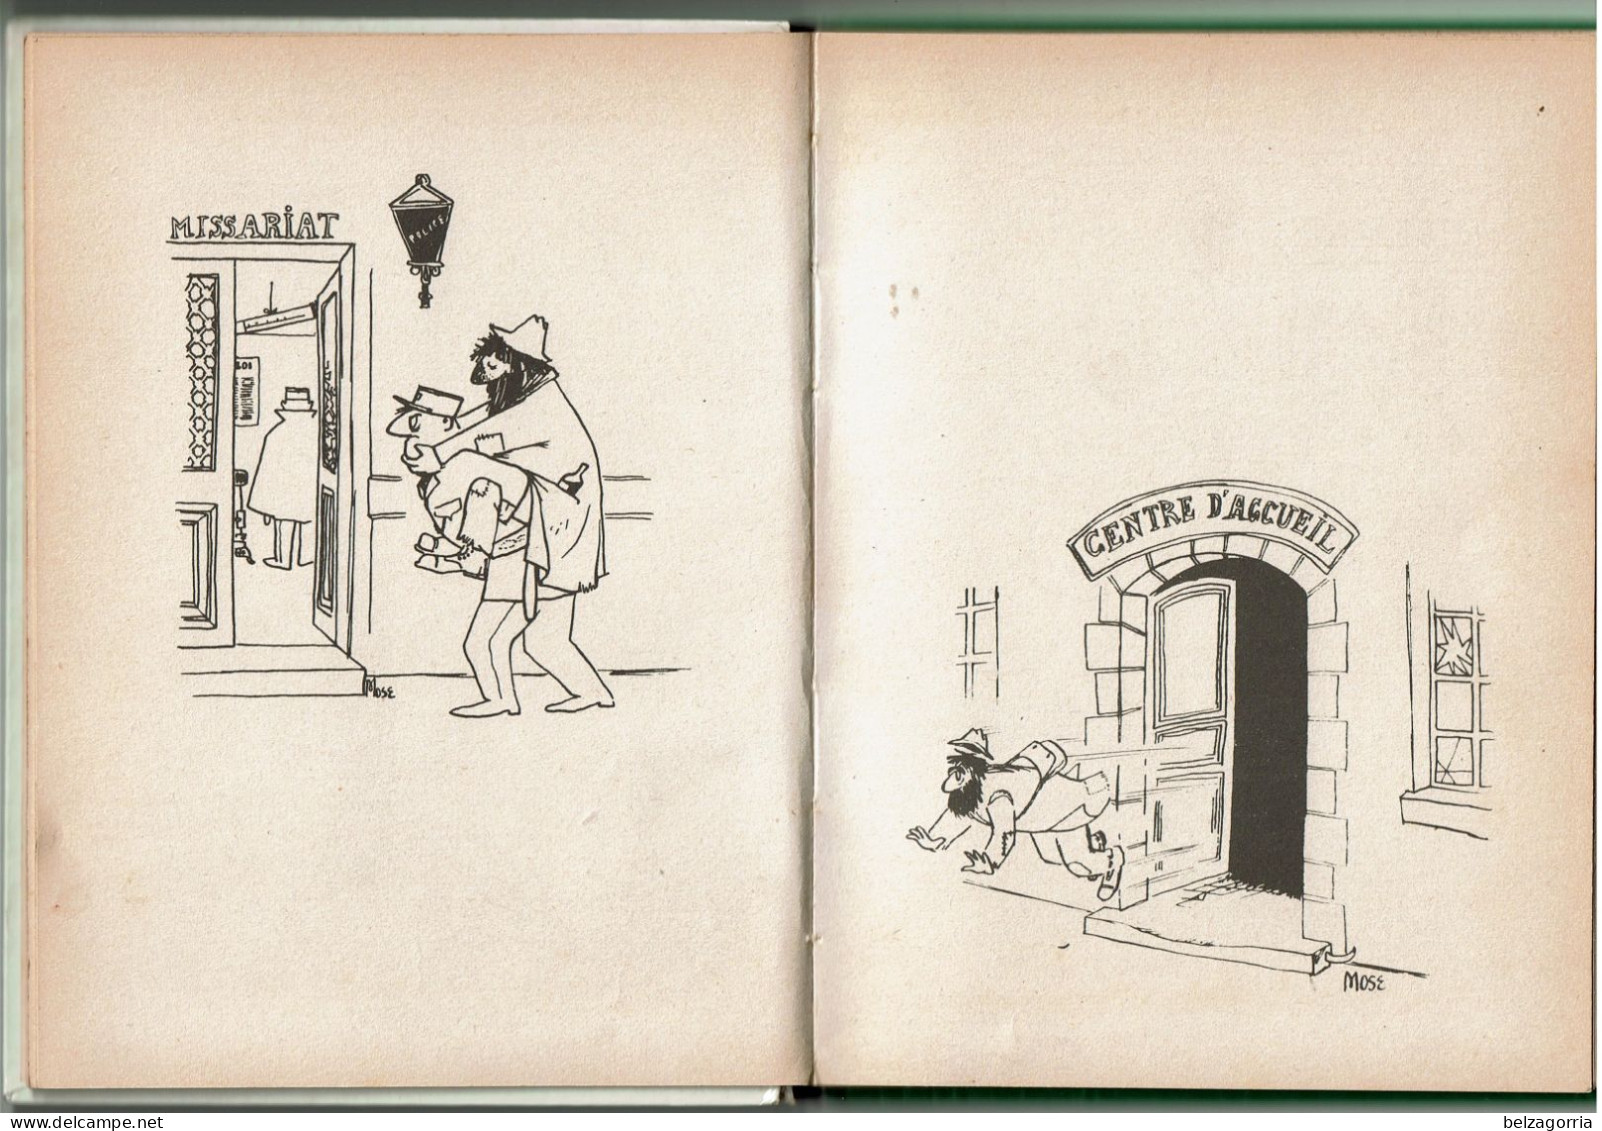 LIBERTE CHERIE De FERNAND HAZAN - Dessins Et Planches Humoristiques Juin 1955 - ( Pas Courant ) VOIR SCANS - Platten Und Echtzeichnungen